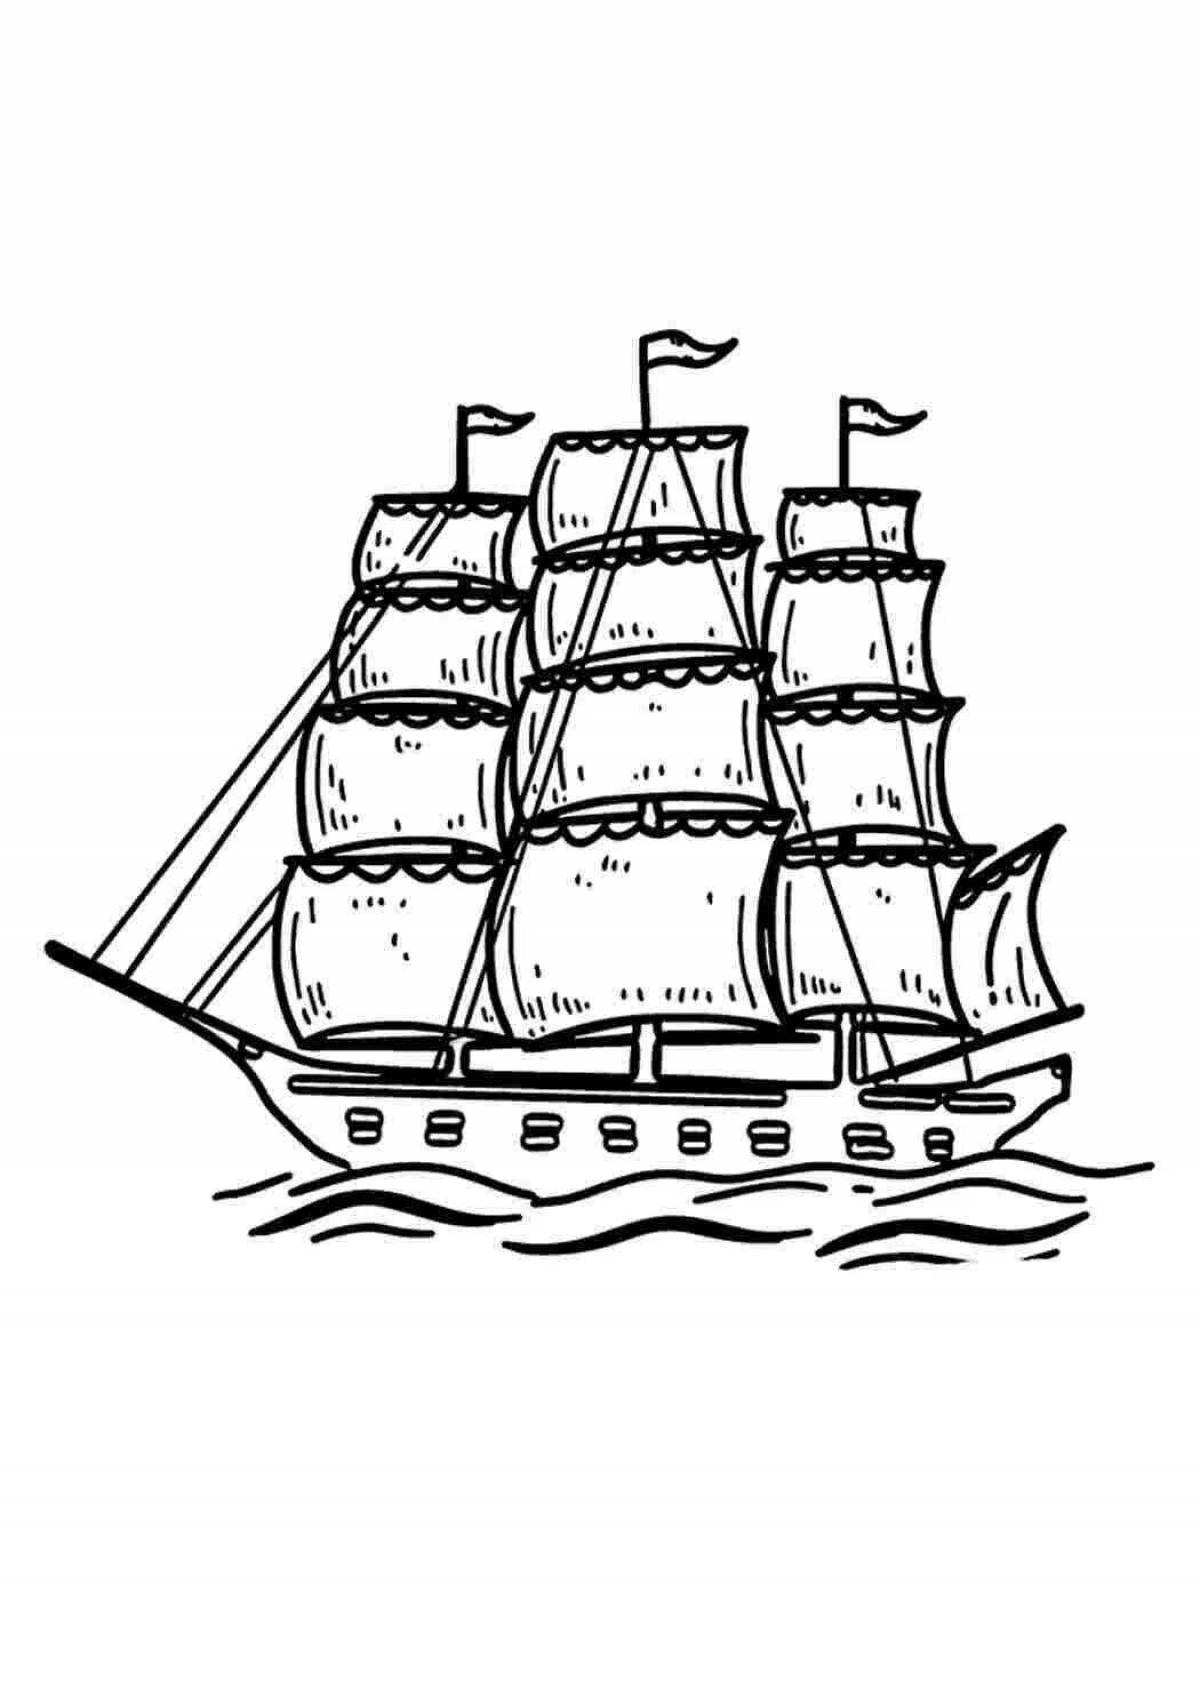 Royal peter's ship